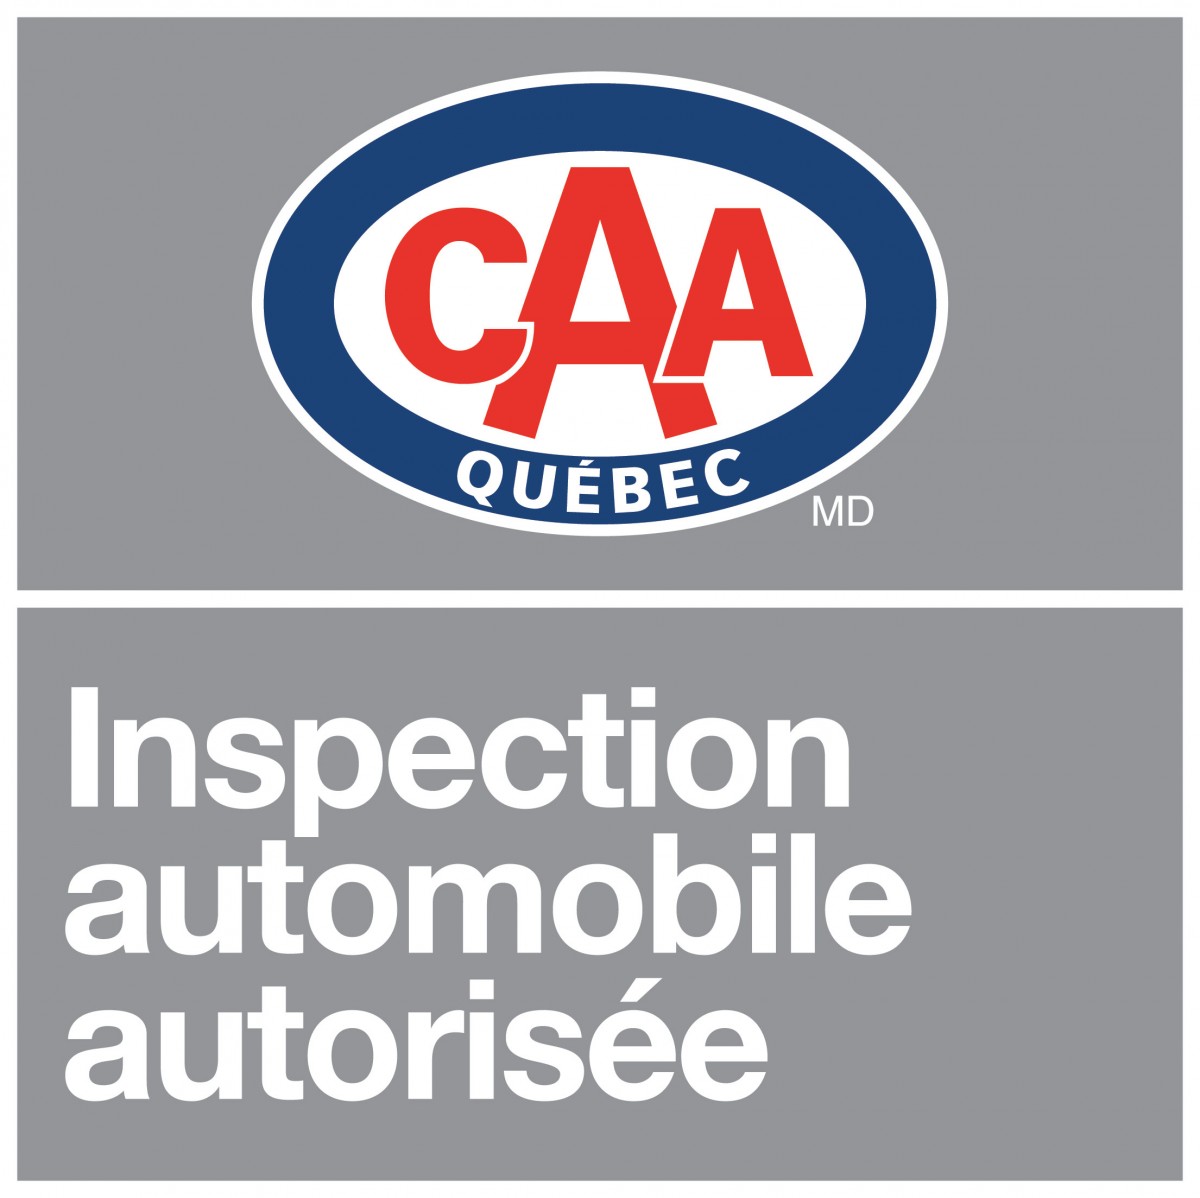 CAA inspection